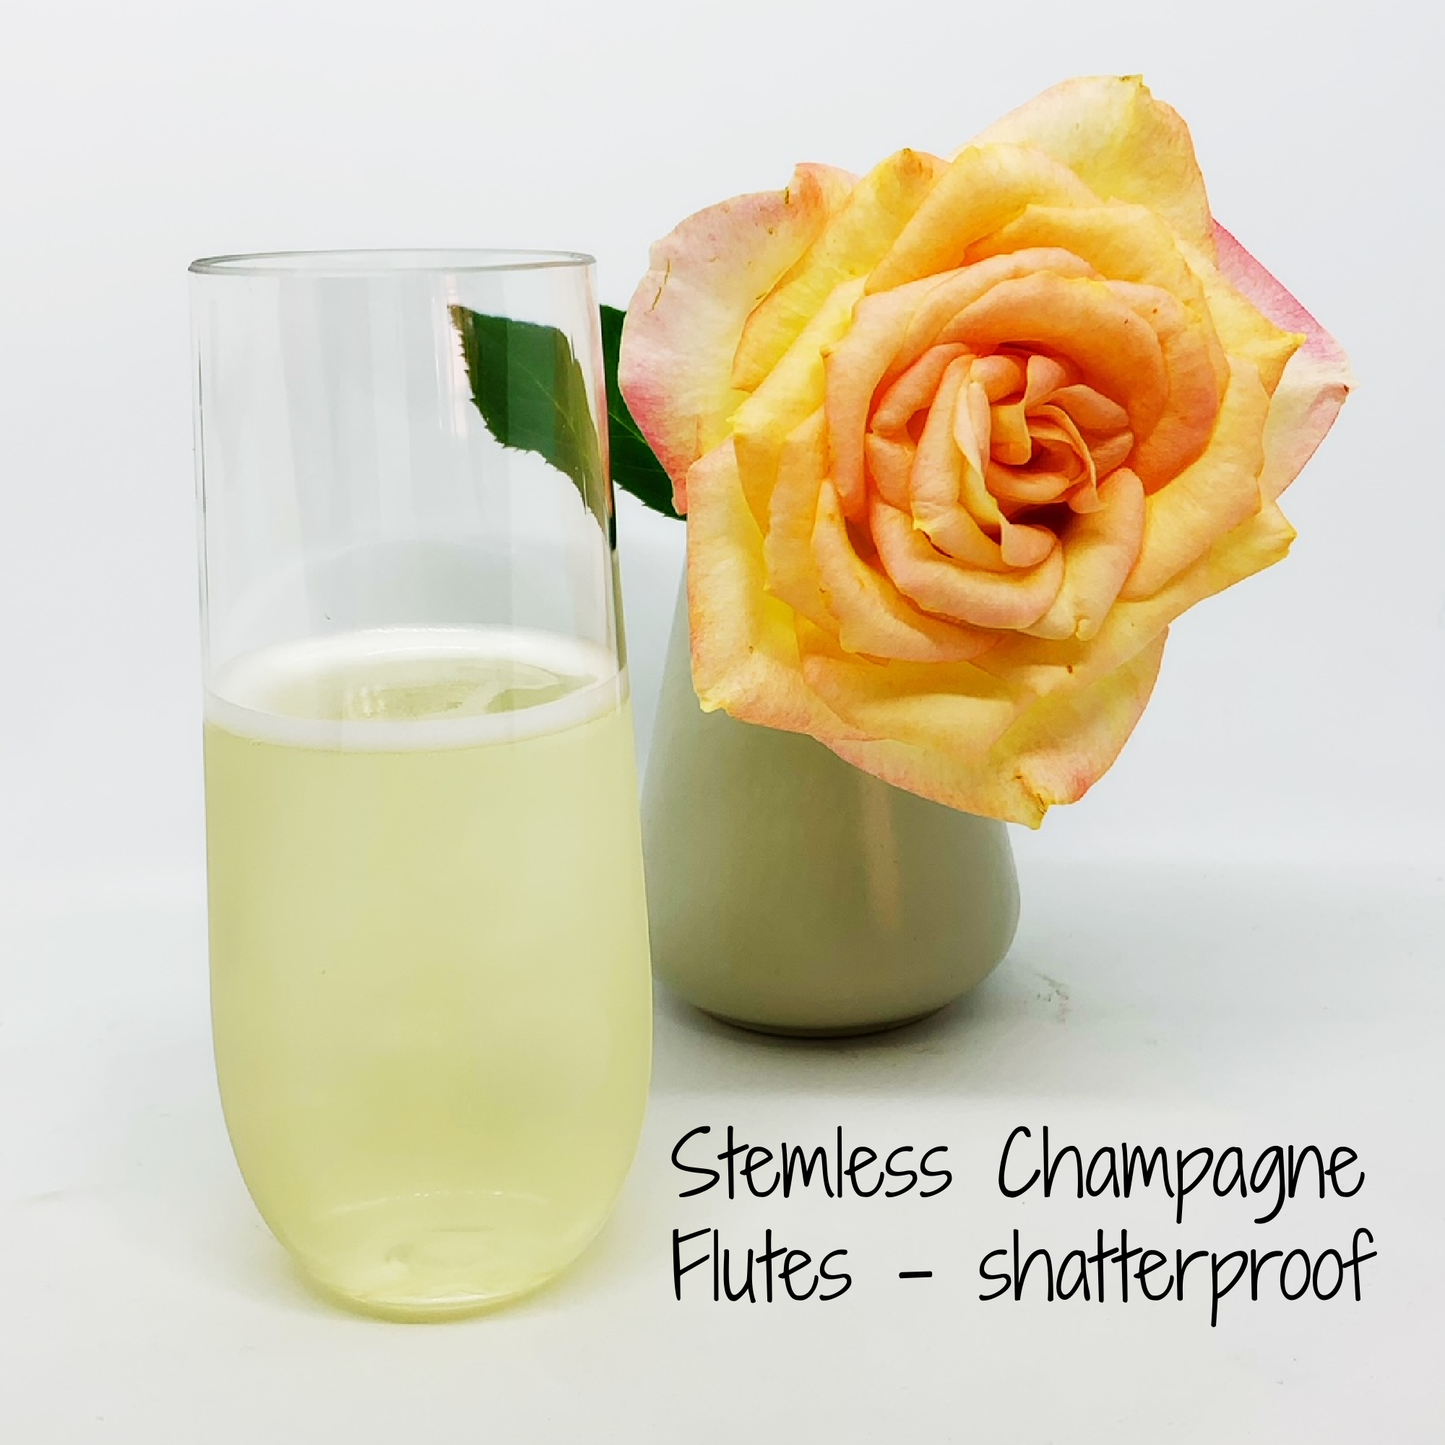 Personalised Stemless Champagne Flute - Cooler & Flute Set